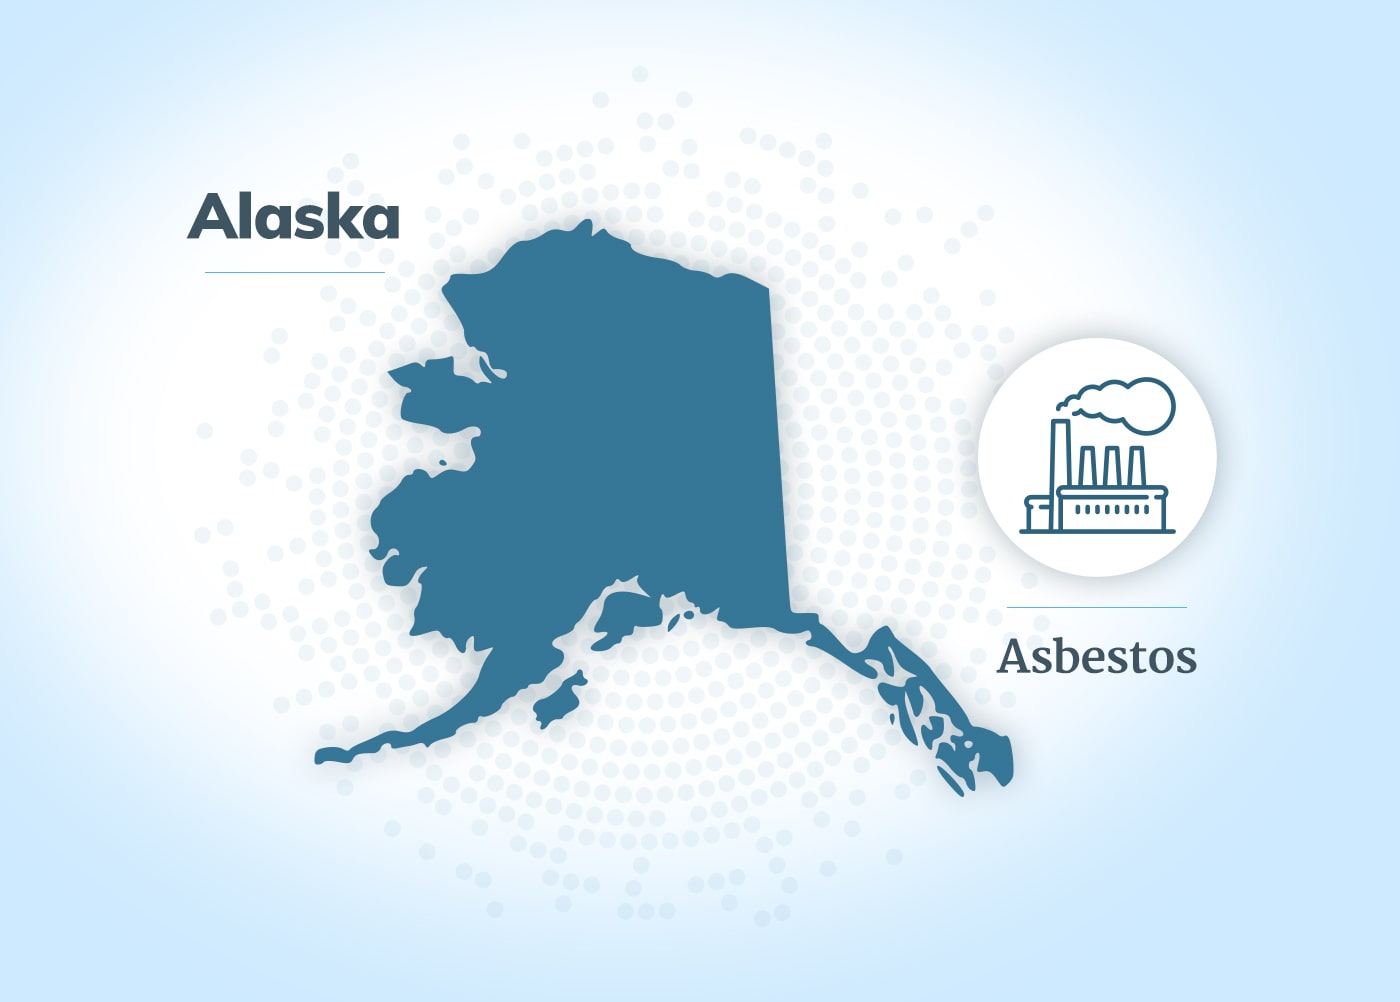 Asbestos exposure in Alaska